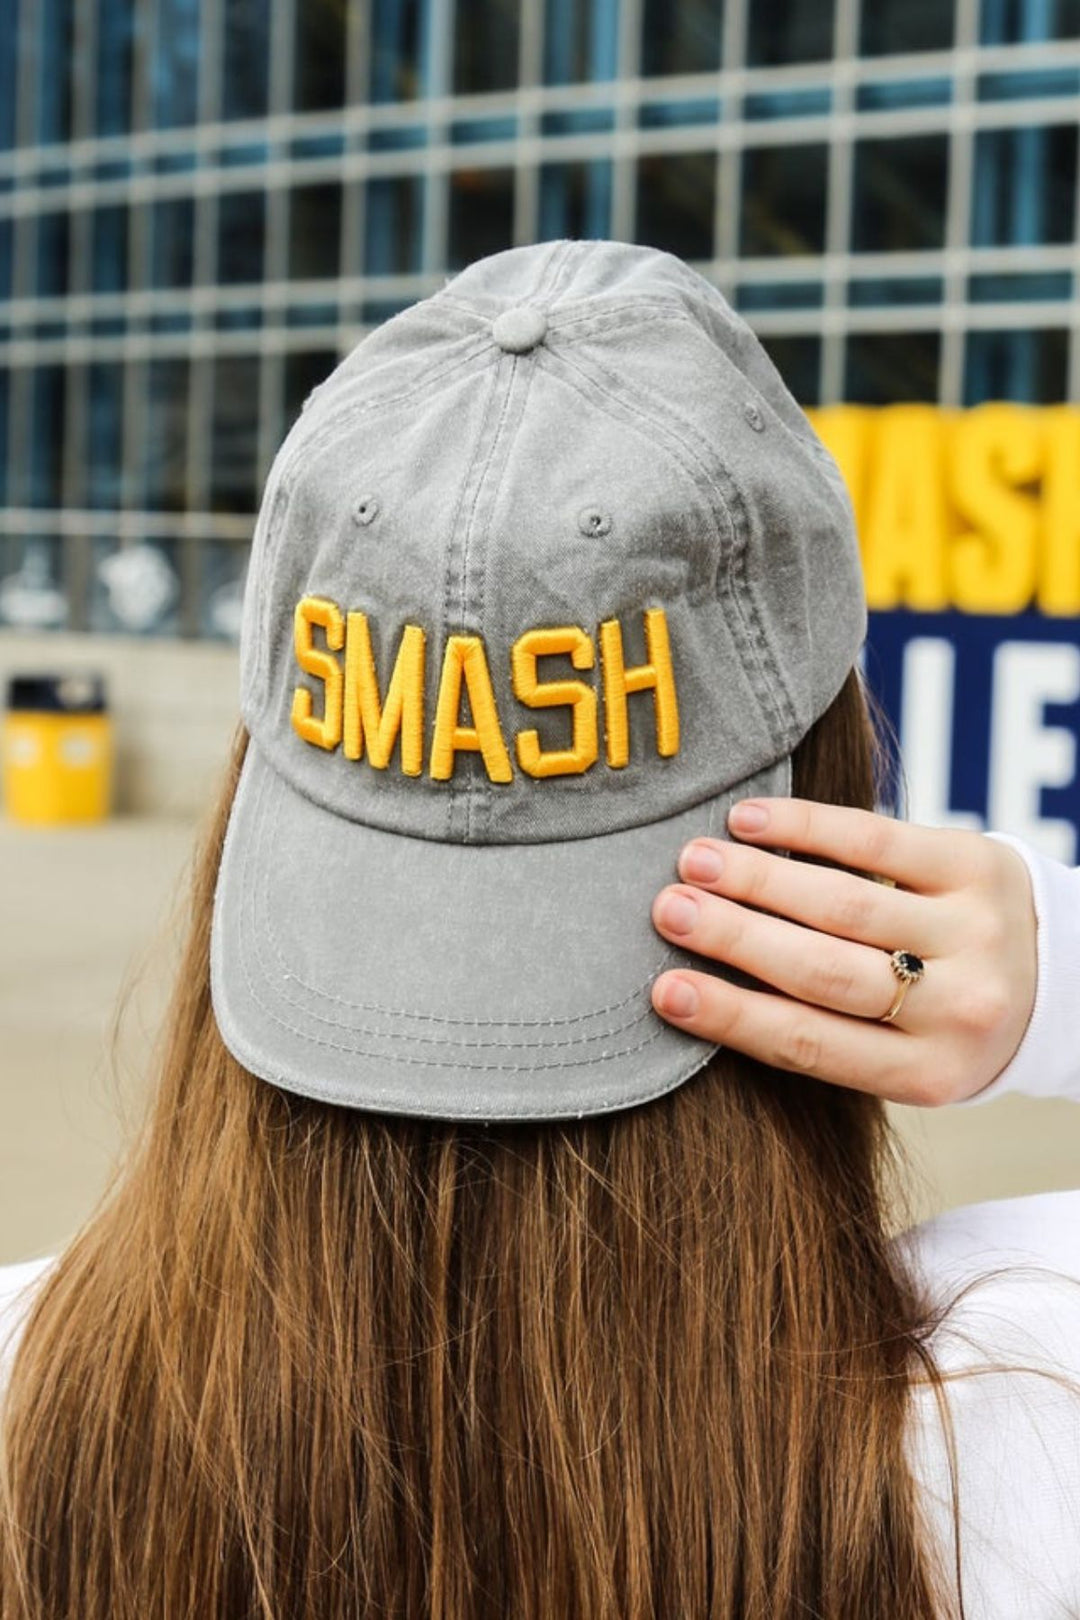 SMASH Ball Cap [Vintage Gray]